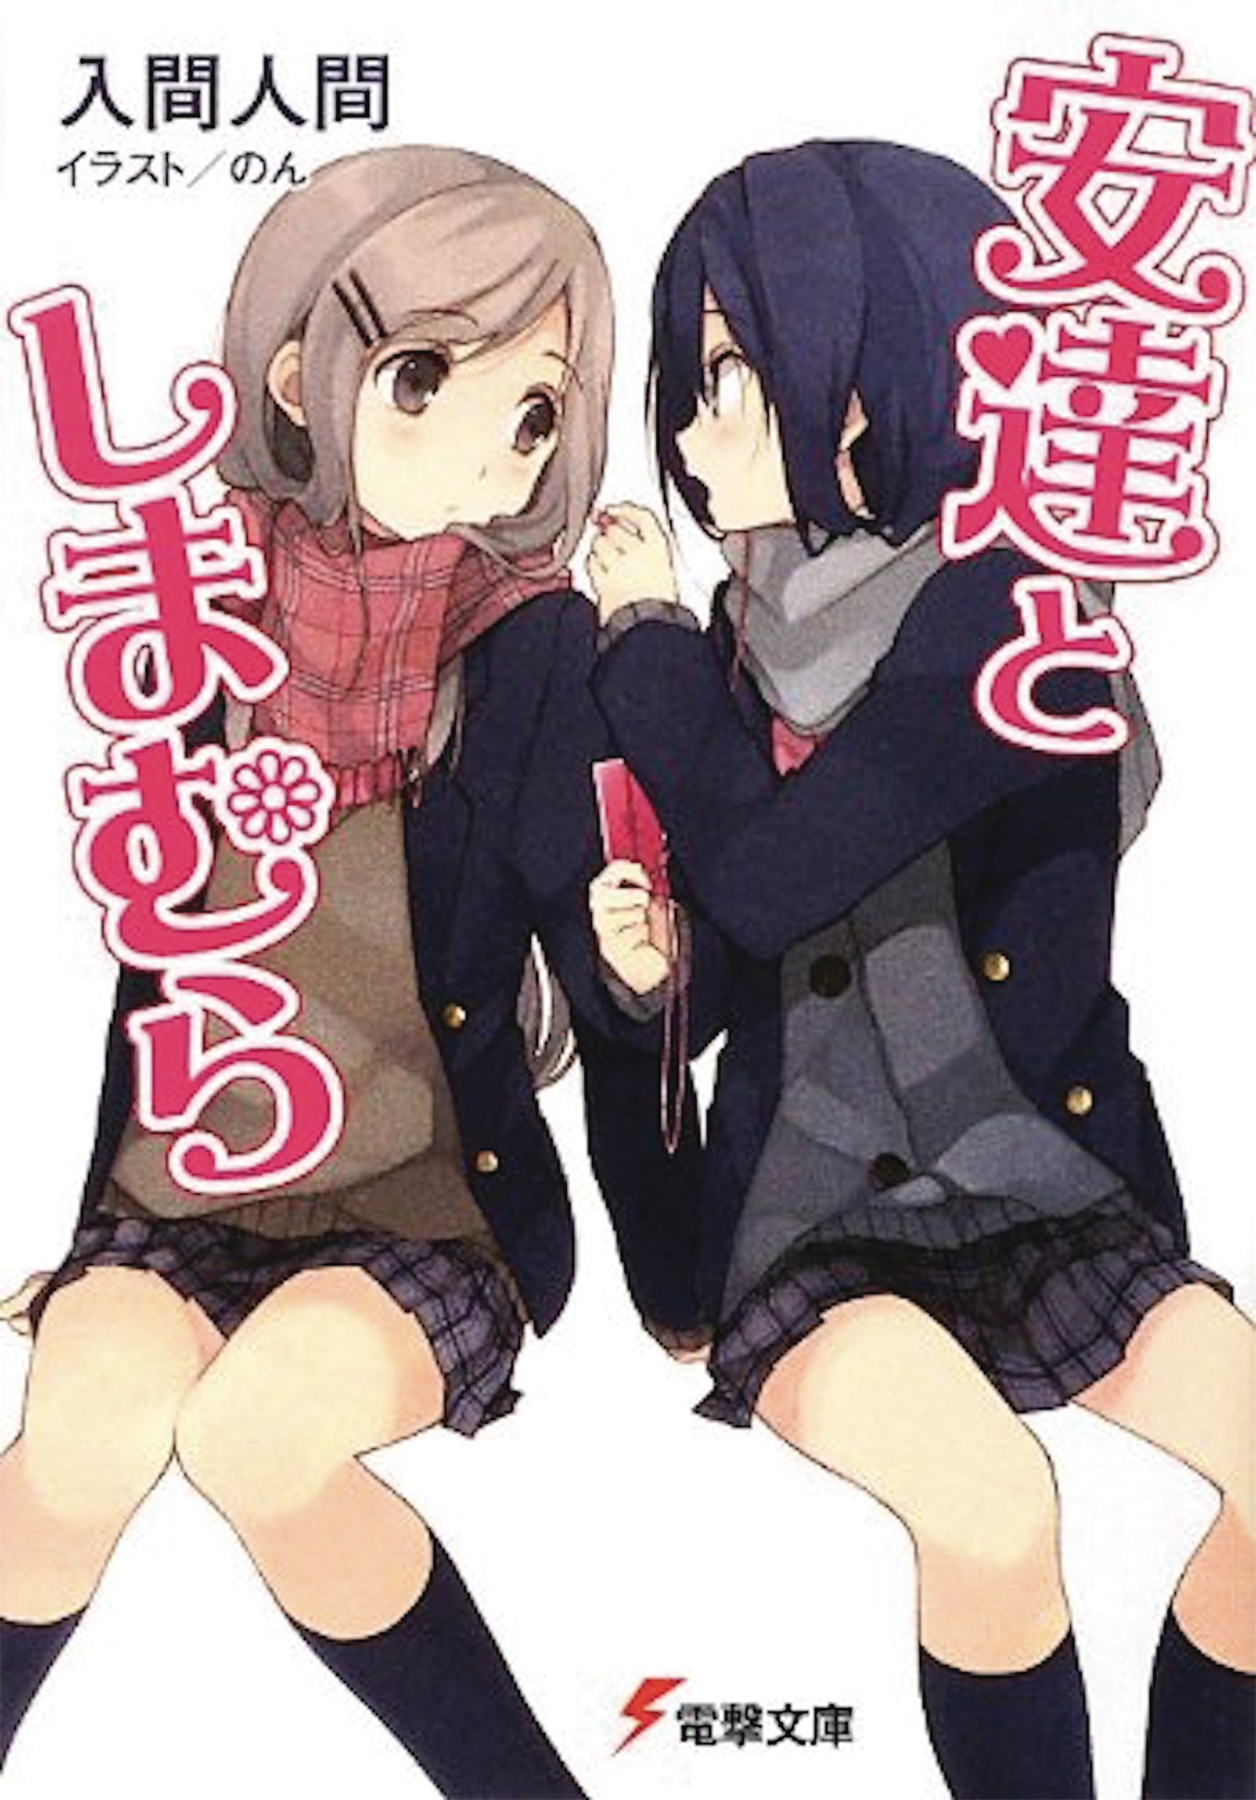 Adachi & Shimamura Light Novel Volume 1